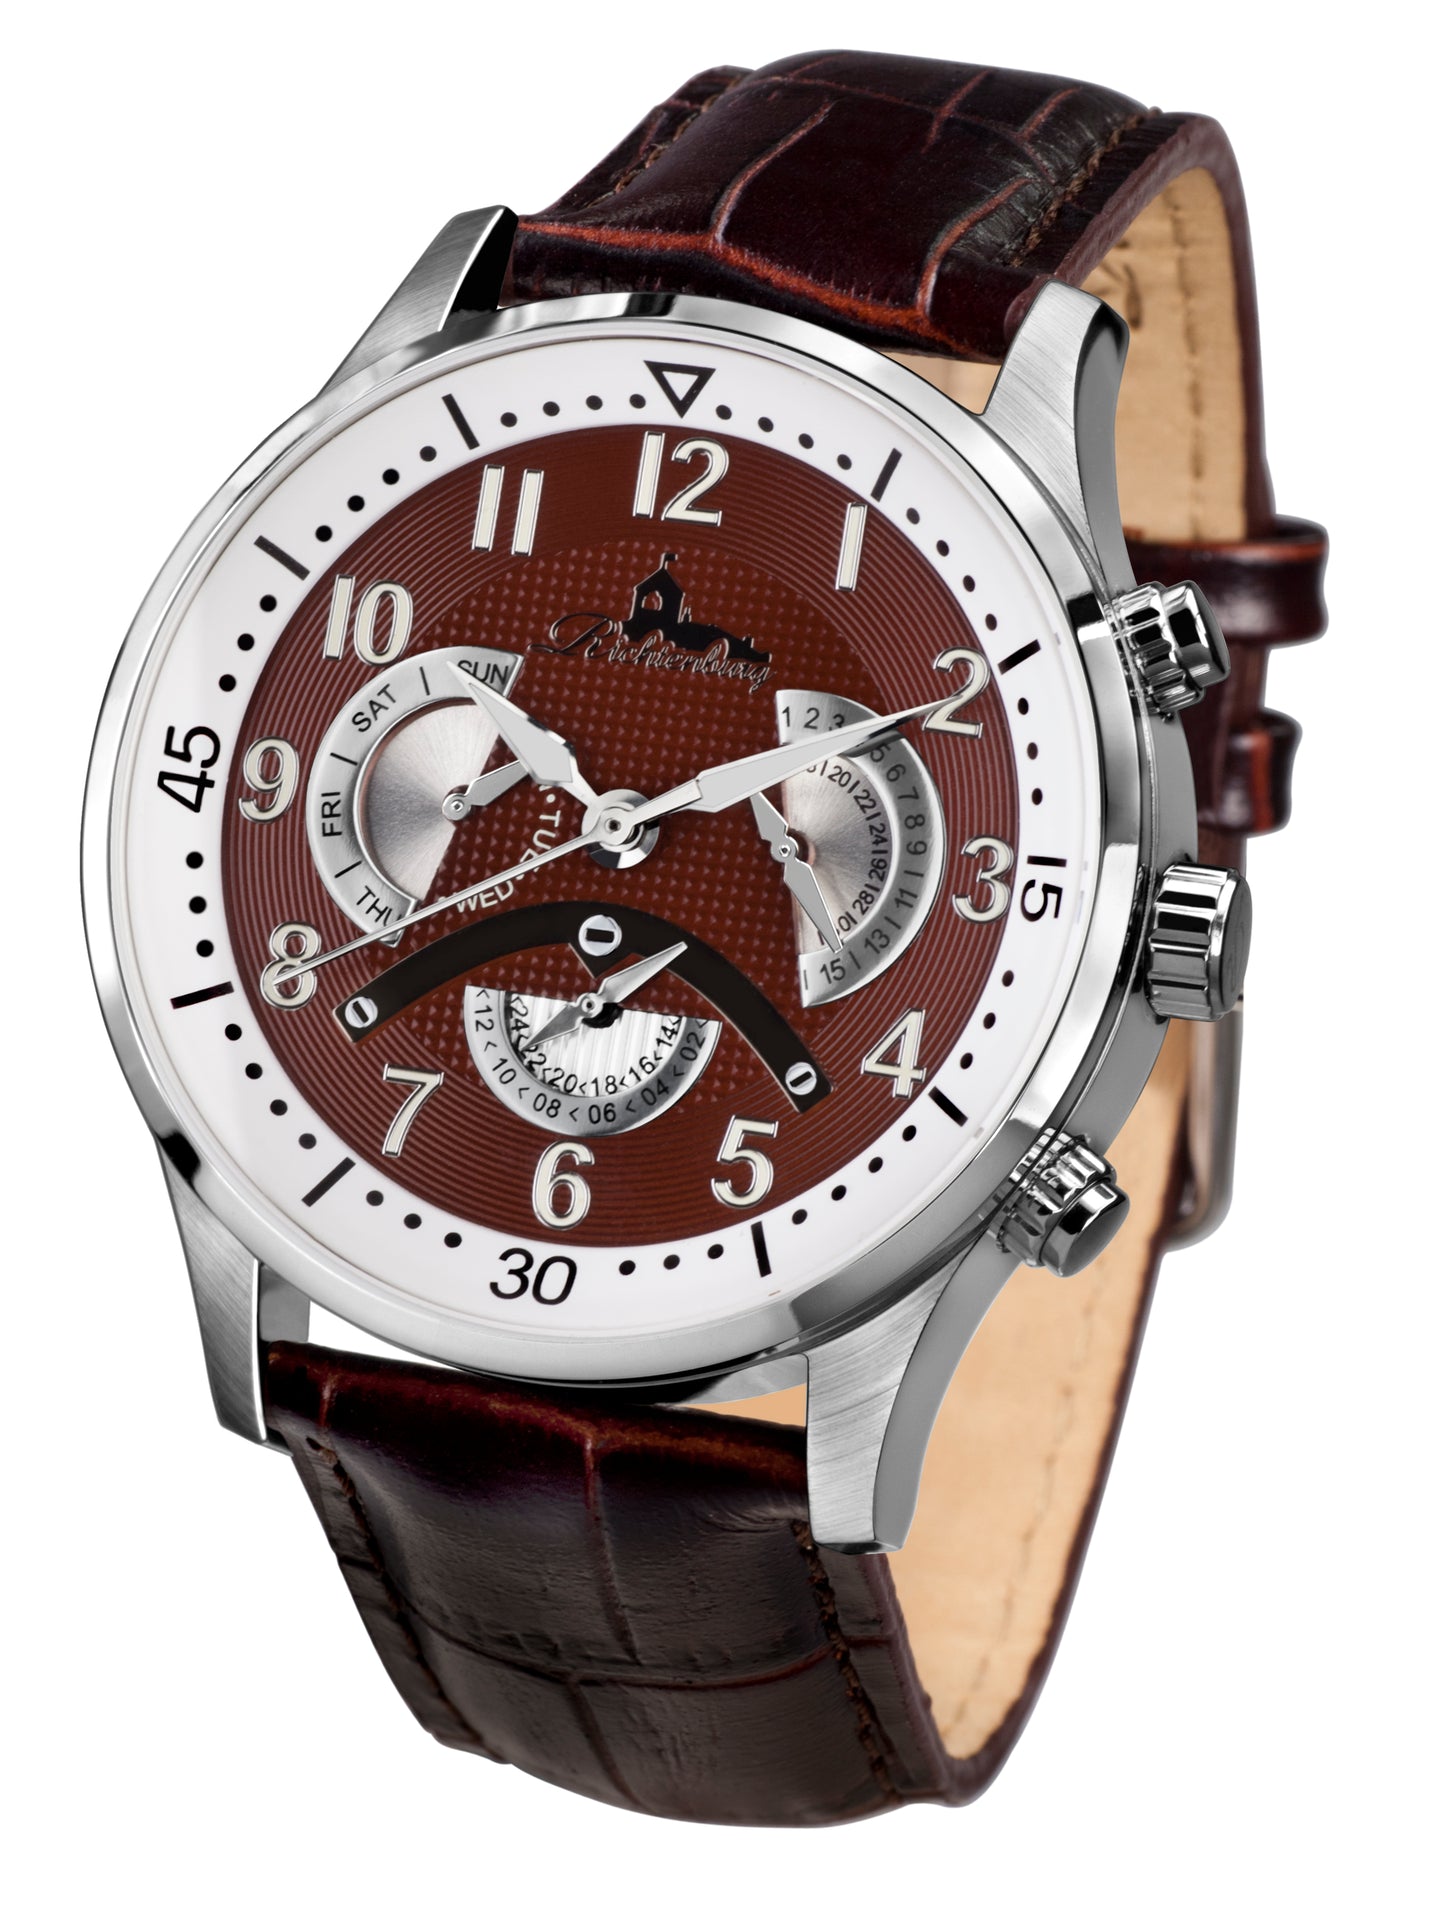 Automatic watches — Apia — Richtenburg — leather brown